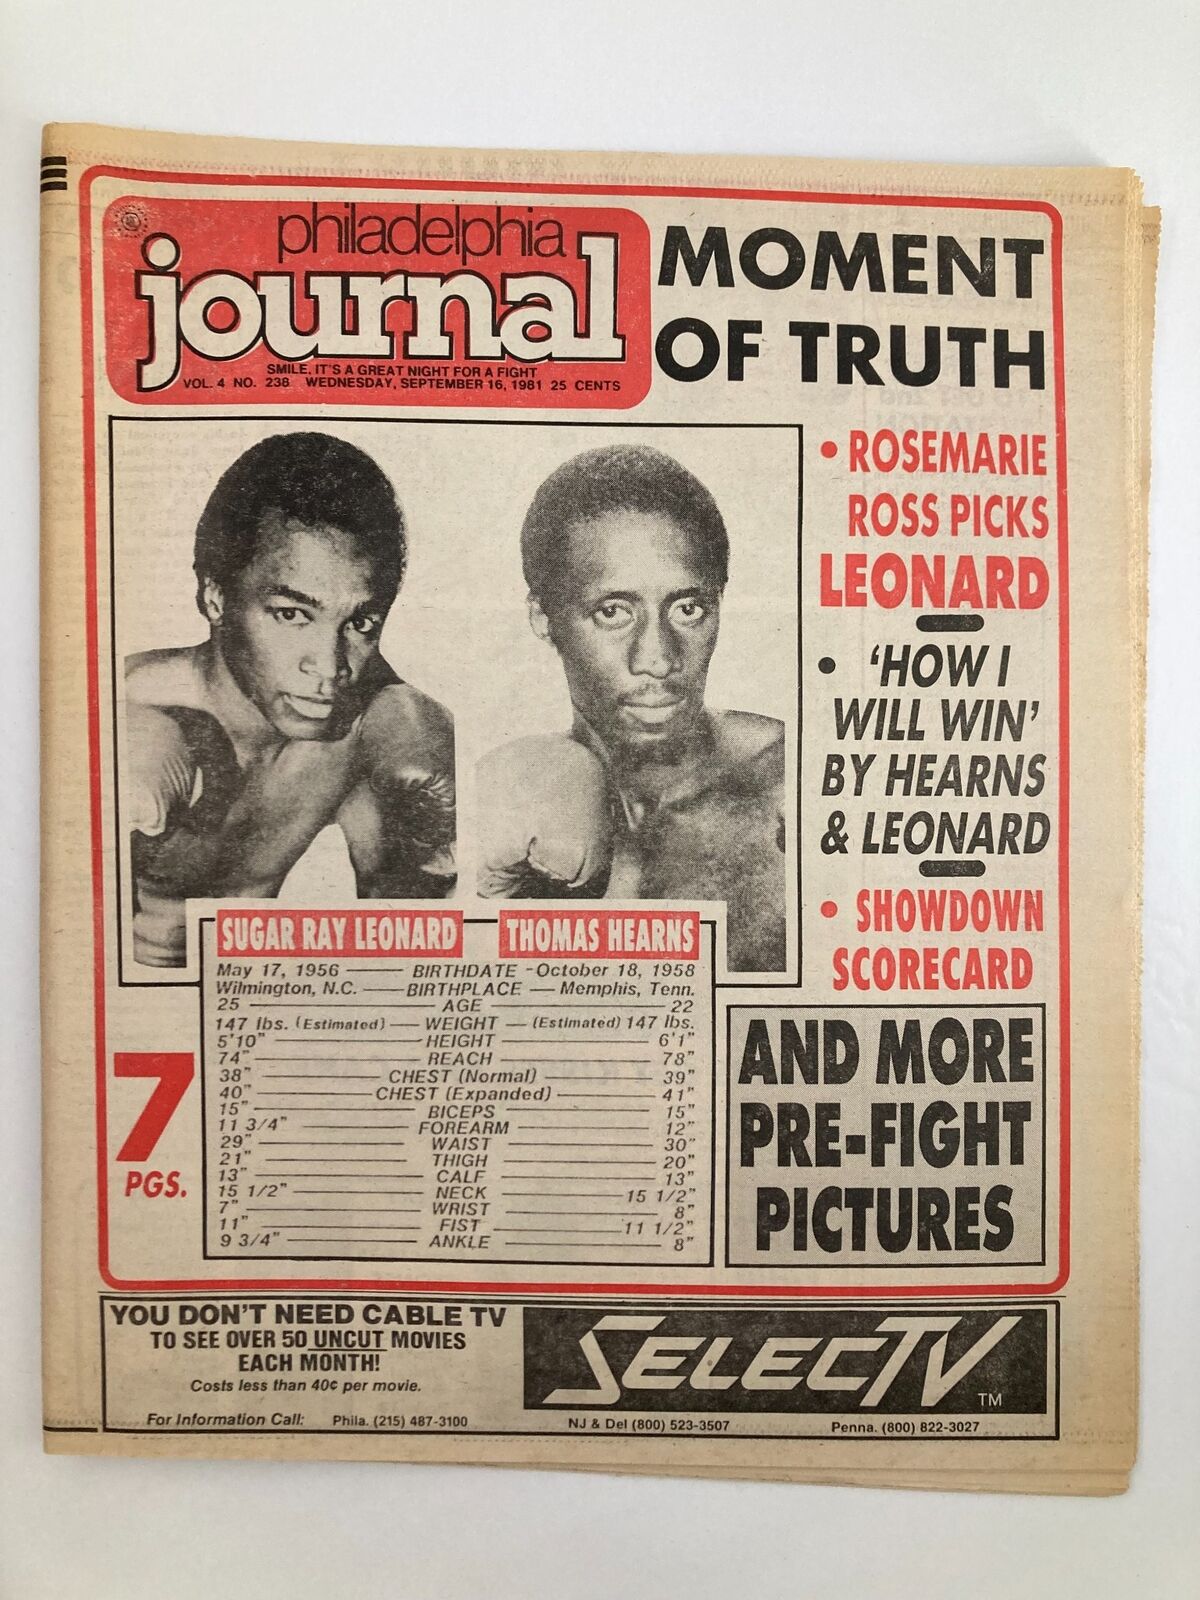 Philadelphia Journal Tabloid September 16 1981 Sugar Ray Leonard v Thomas Hearns